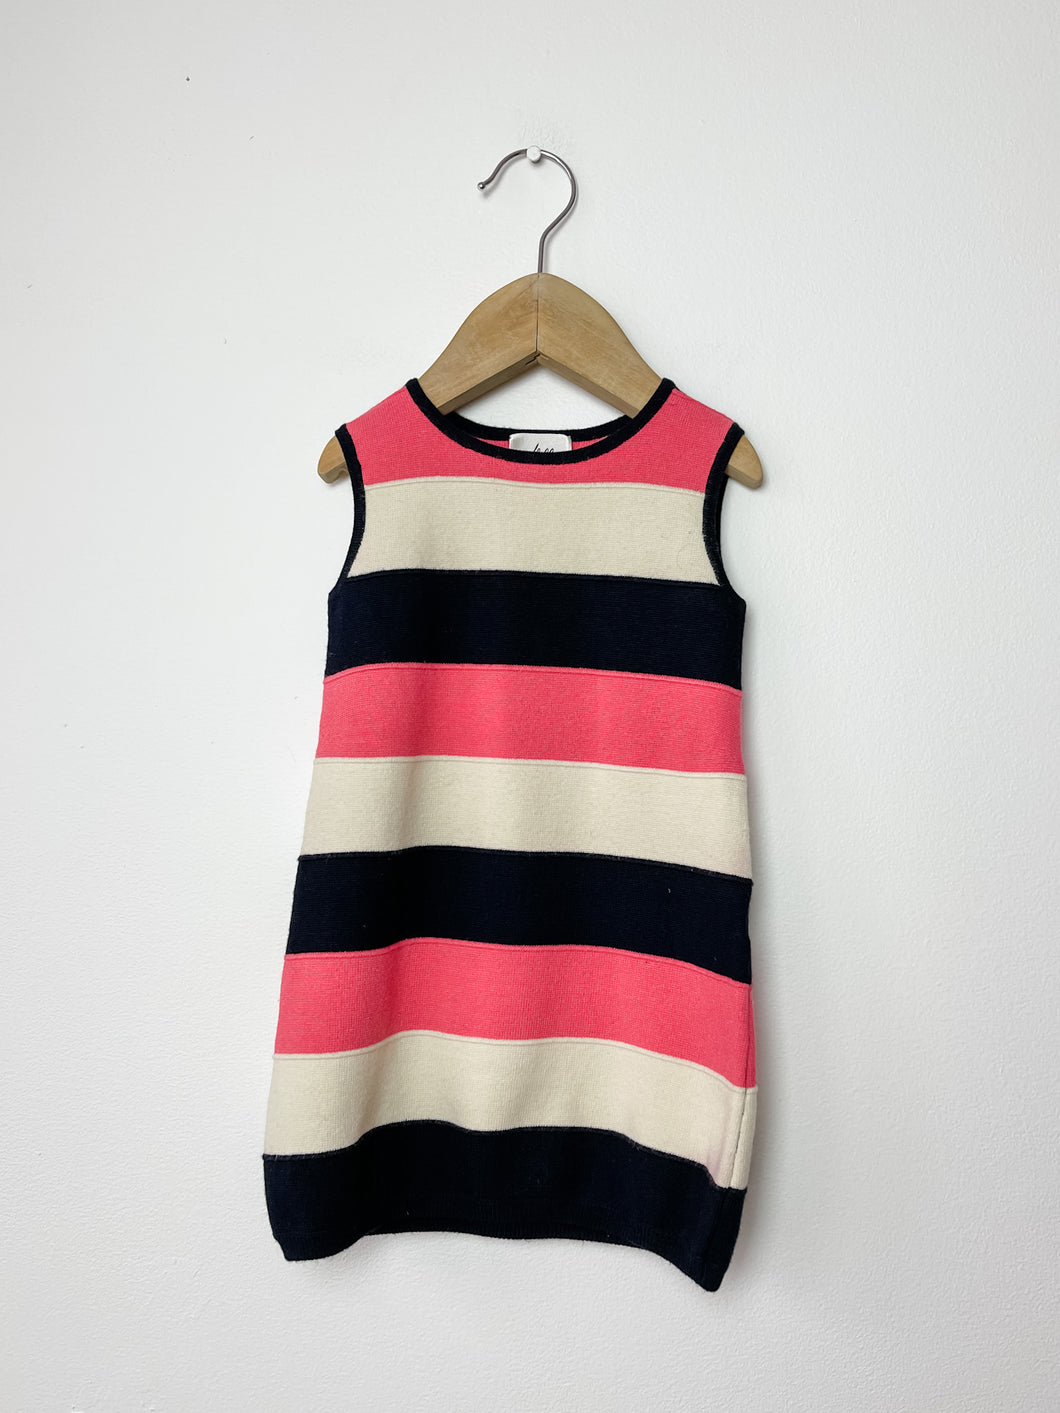 Striped Alilly Mini Dress Size 2T